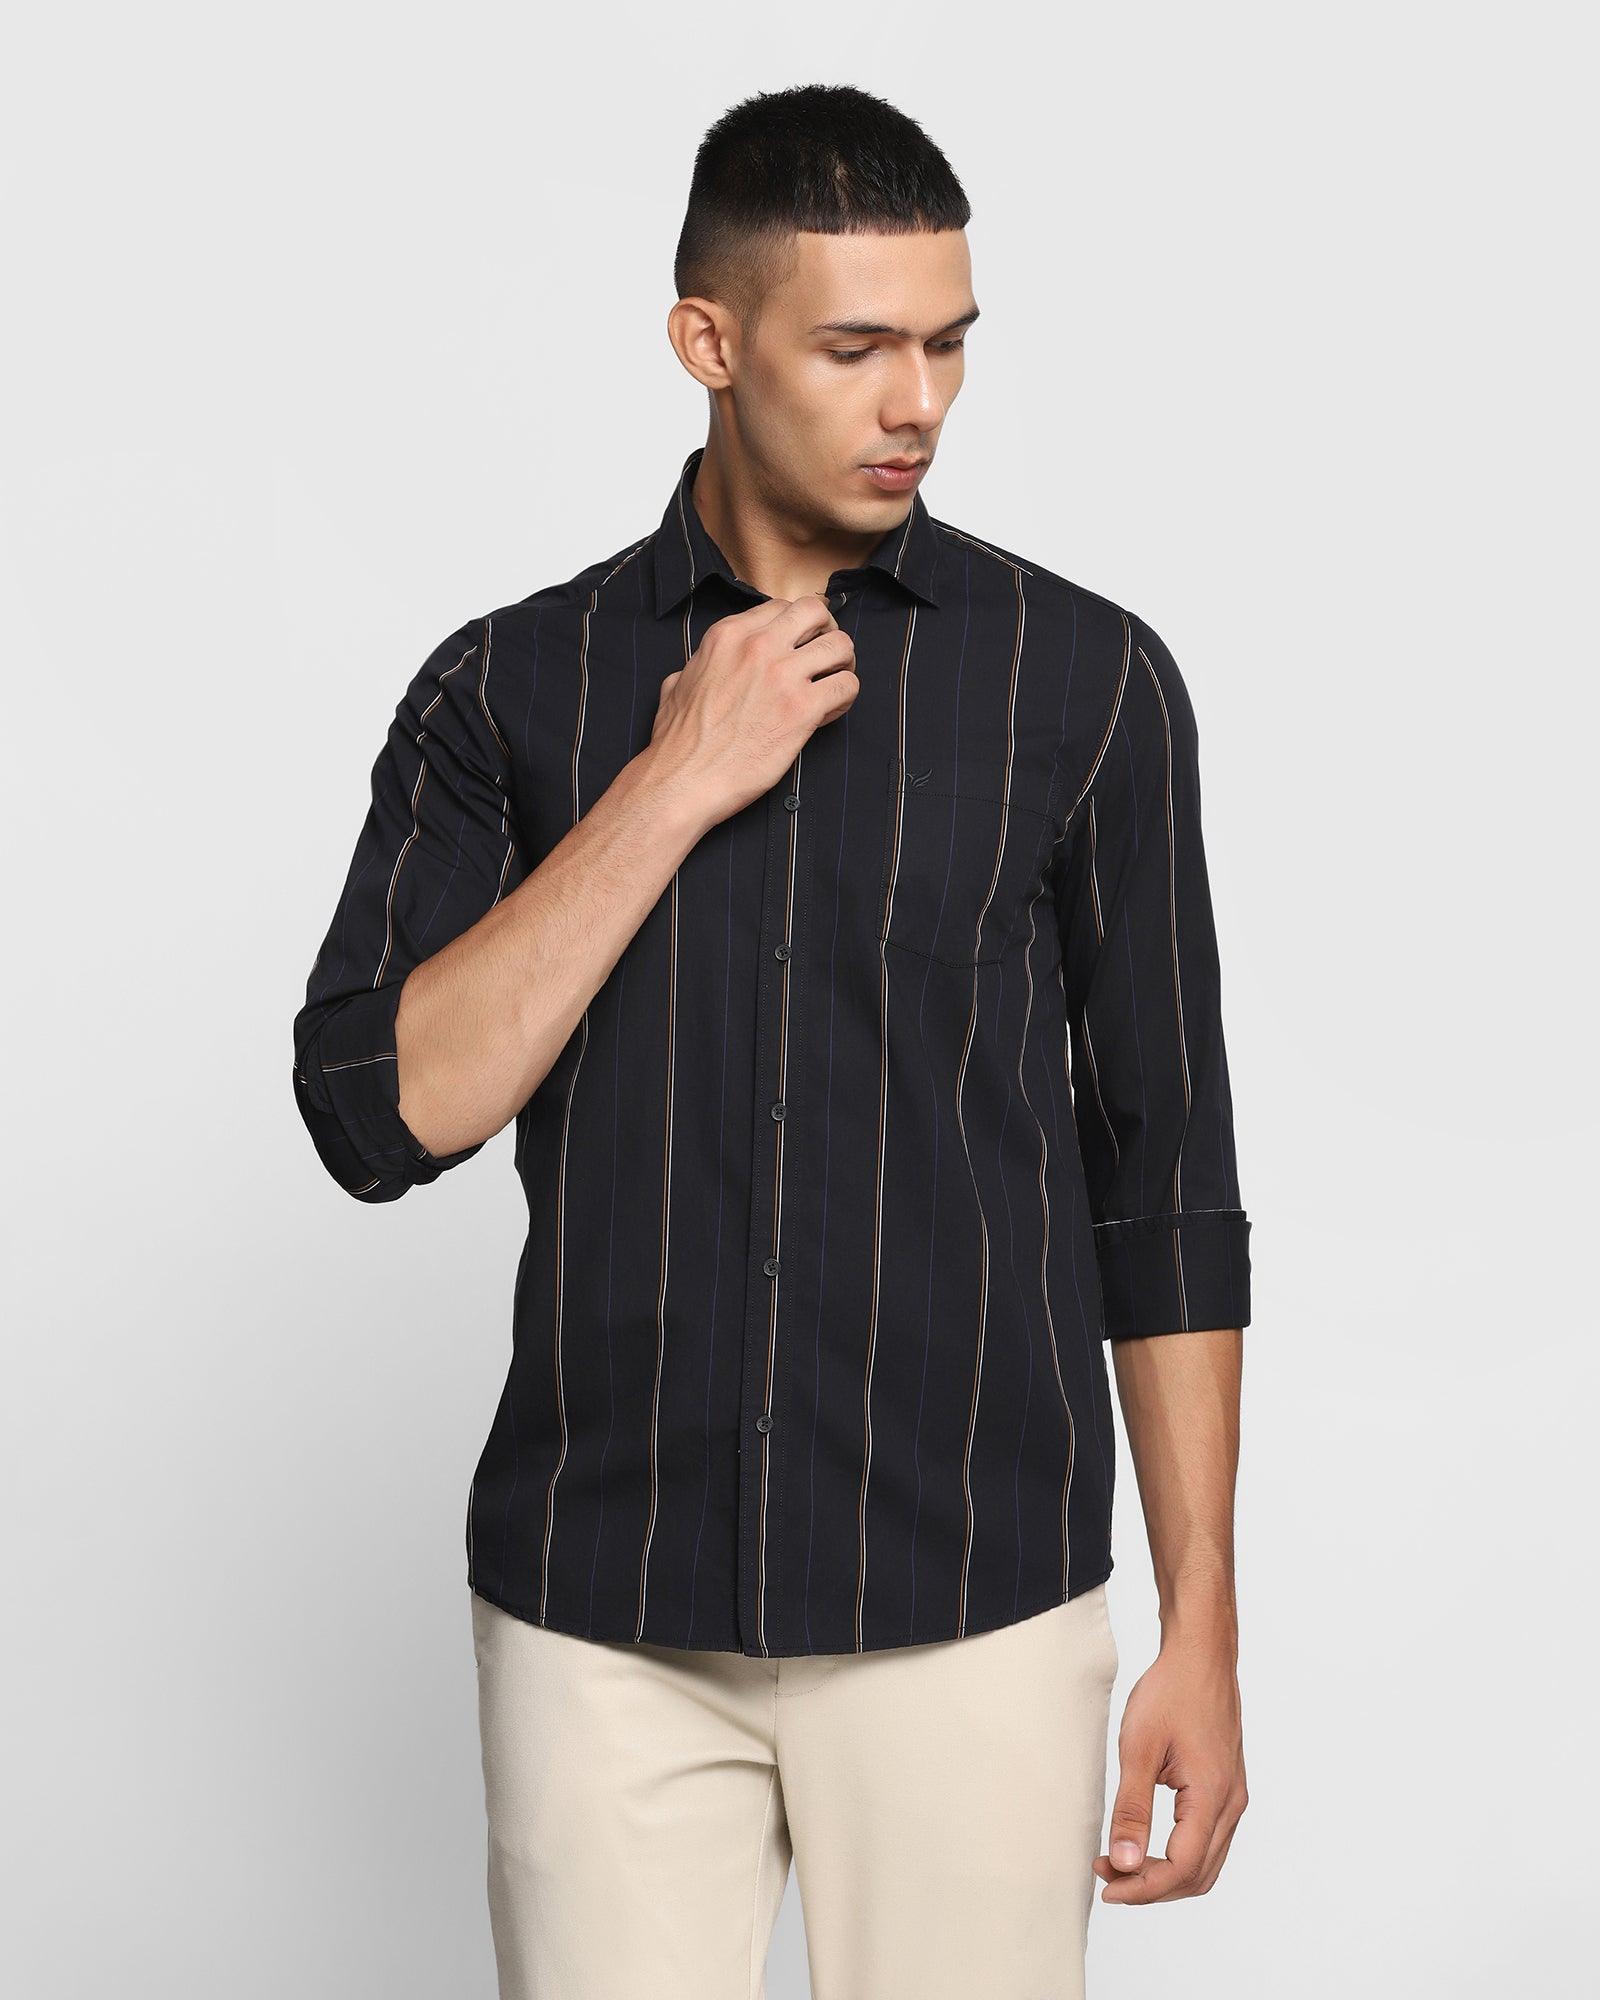 Casual Black Striped Shirt - Mystic